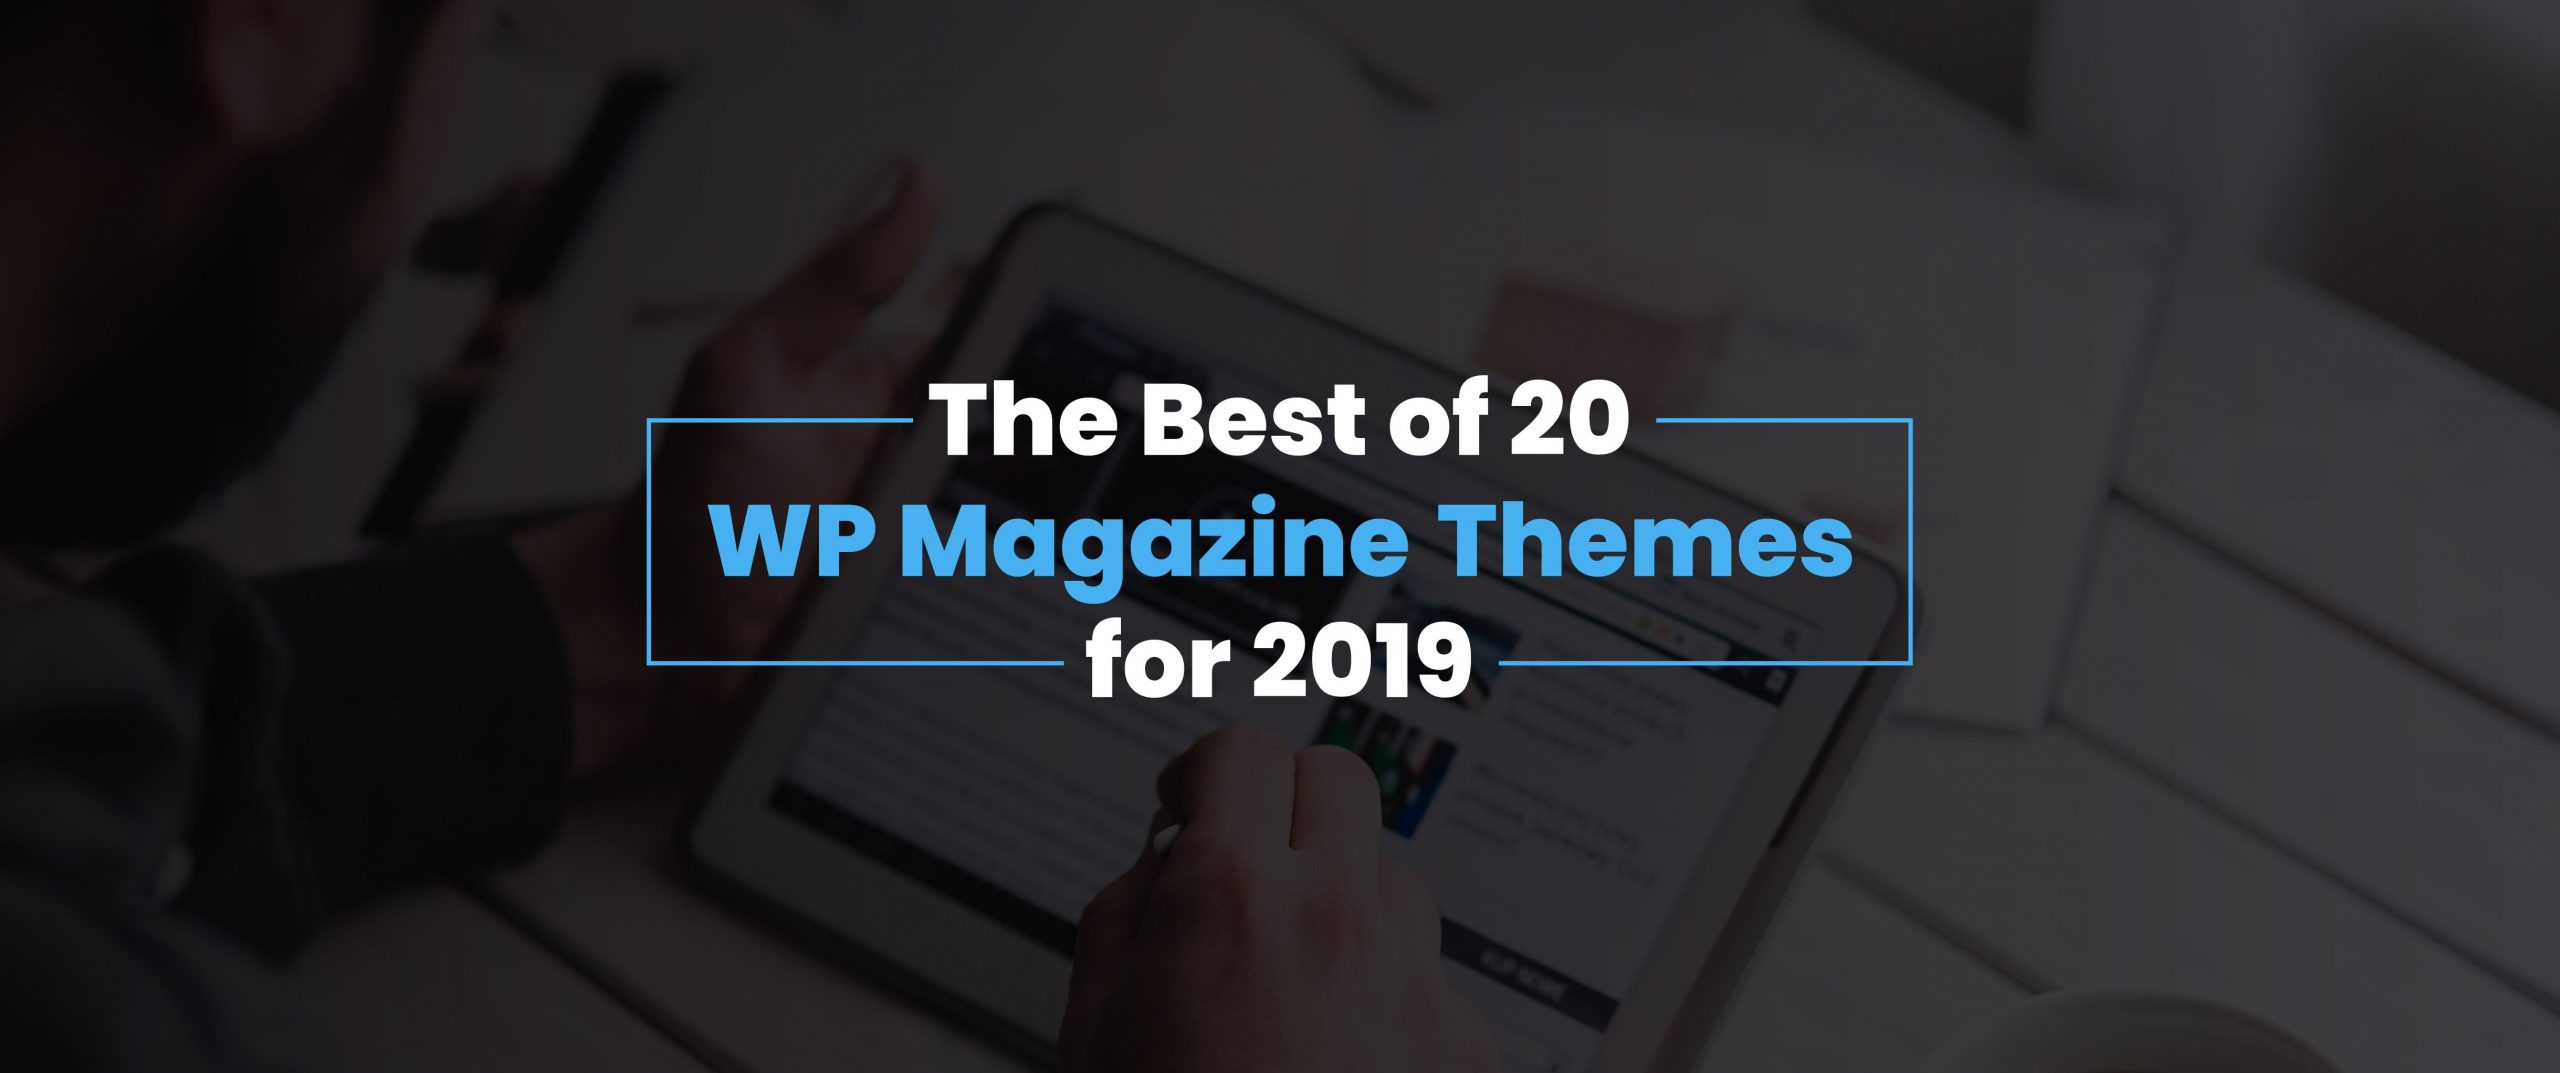 Top 20 WP Magazine Themes